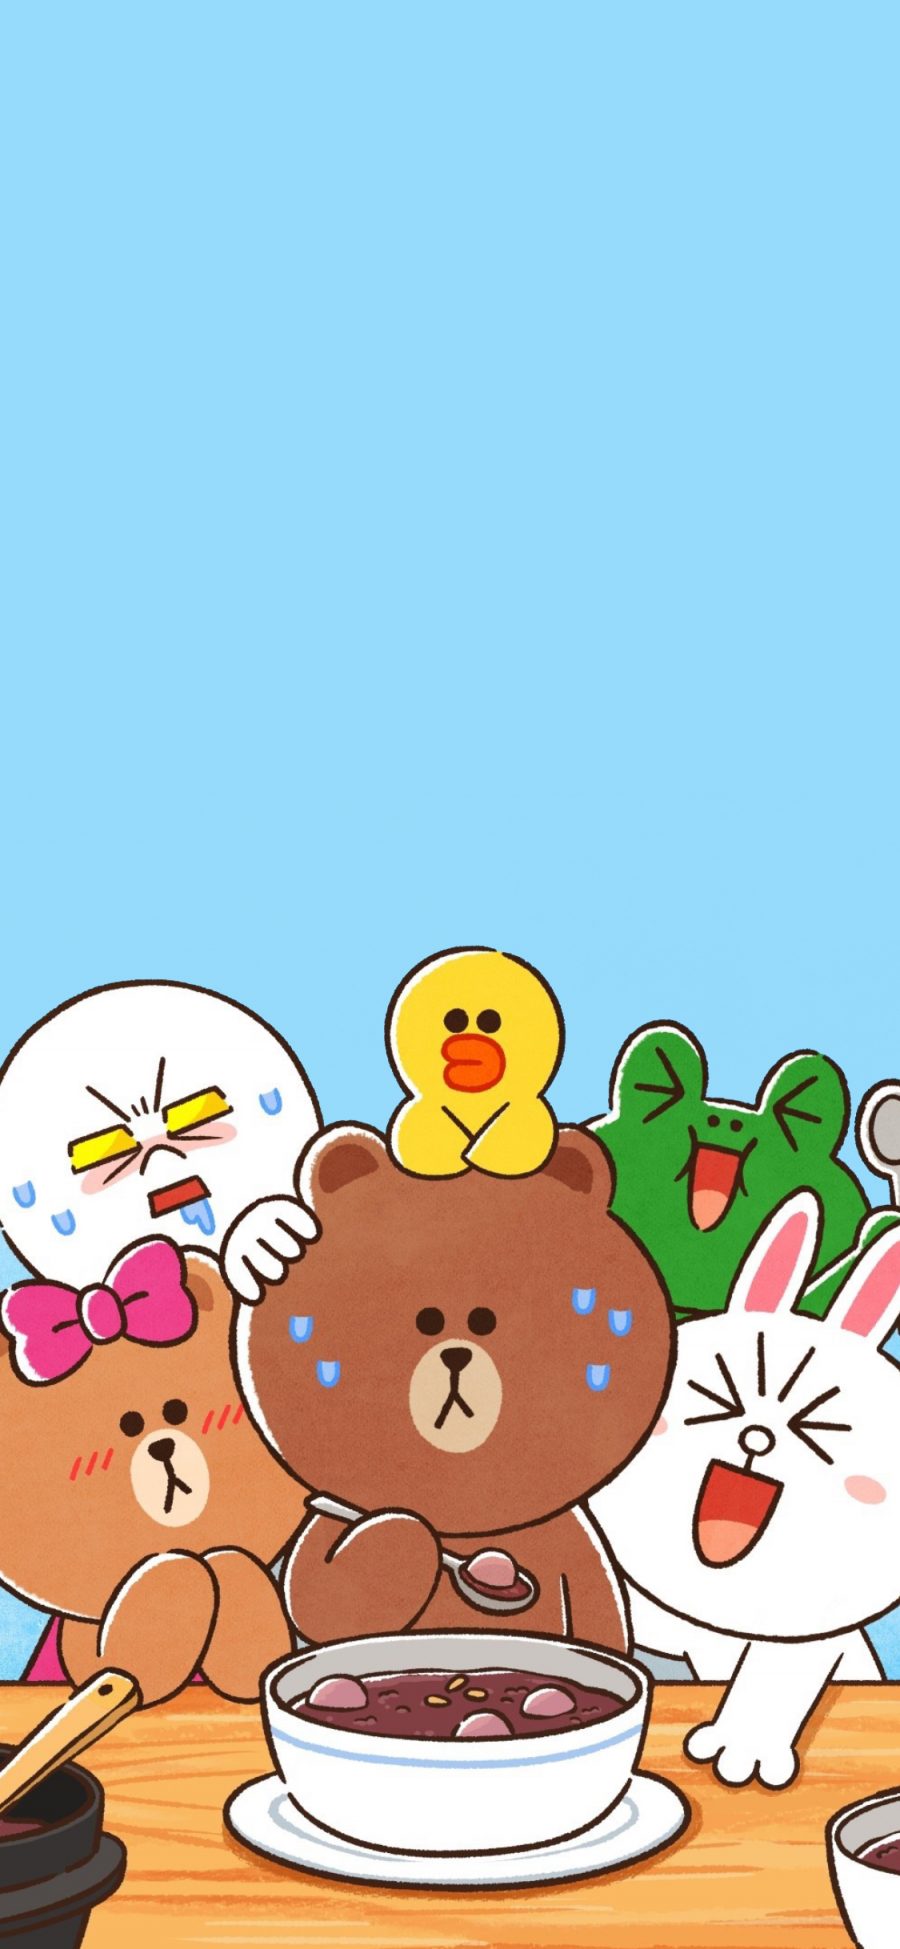 [2436×1125]linefriends 布朗熊 可妮兔 蓝色 可爱 汤圆 苹果手机动漫壁纸图片